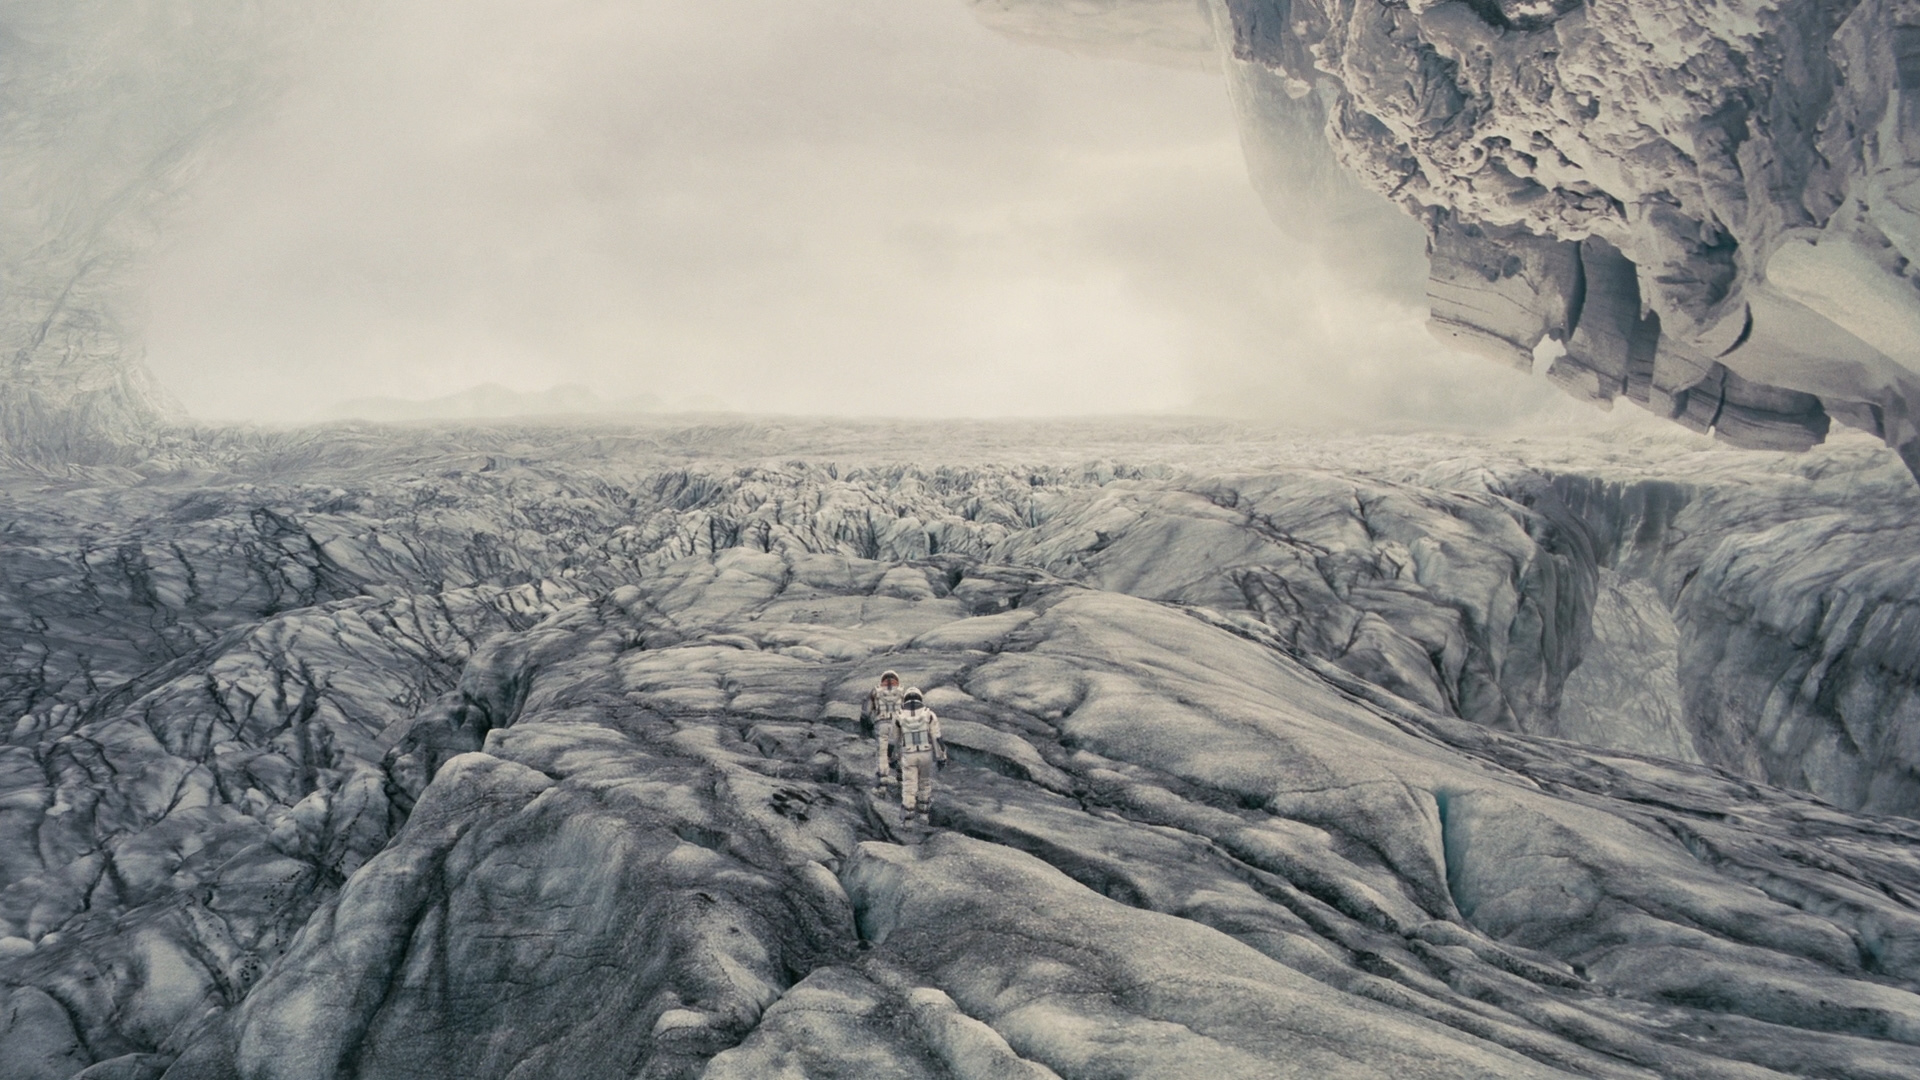 Interstellar Ice Planet - HD Wallpaper 